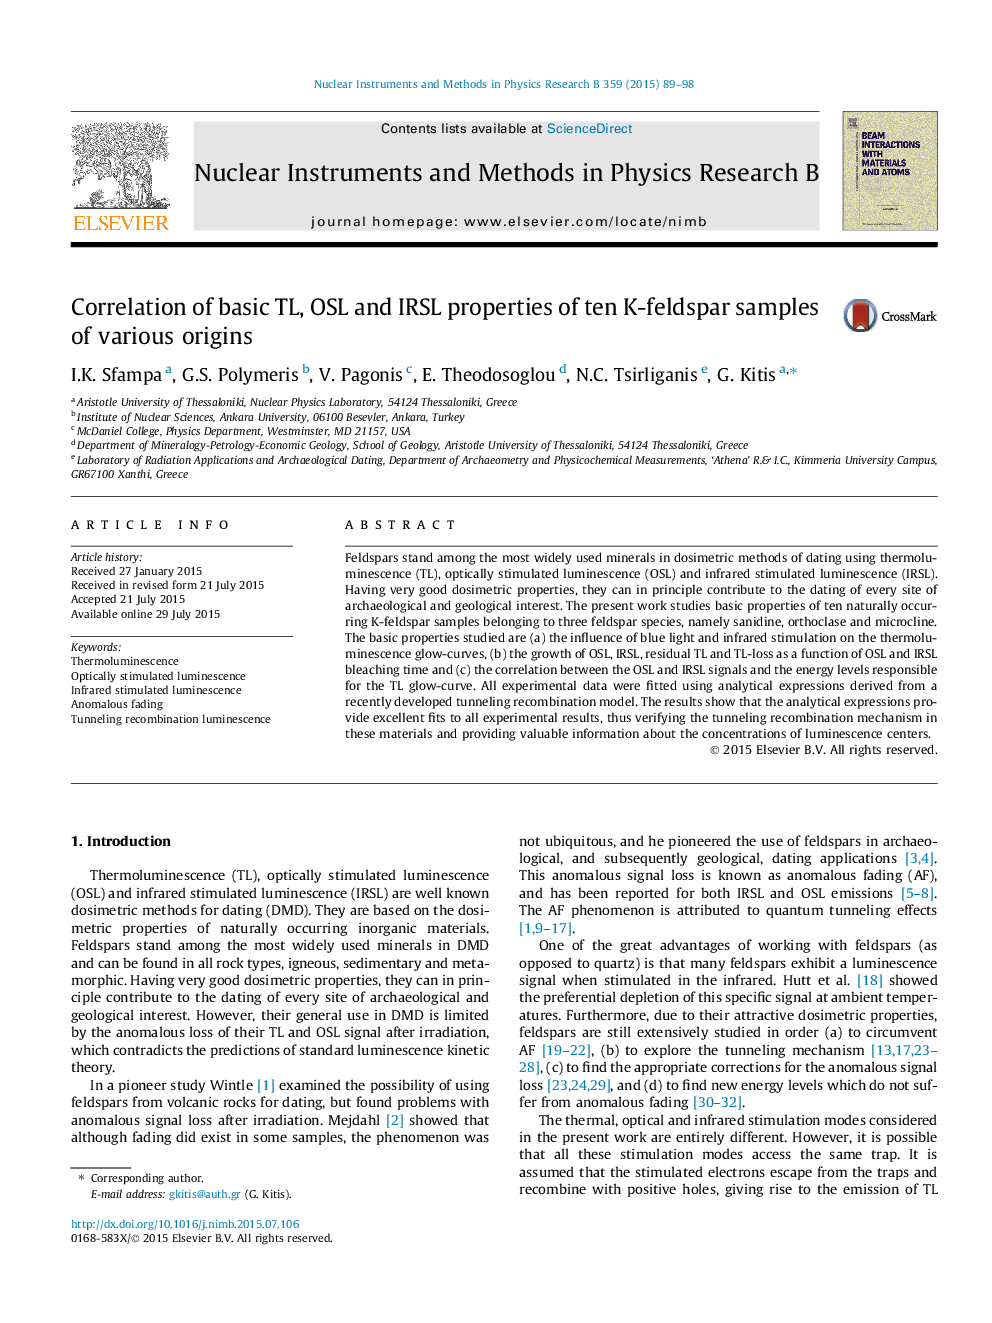 Correlation of basic TL, OSL and IRSL properties of ten K-feldspar samples of various origins